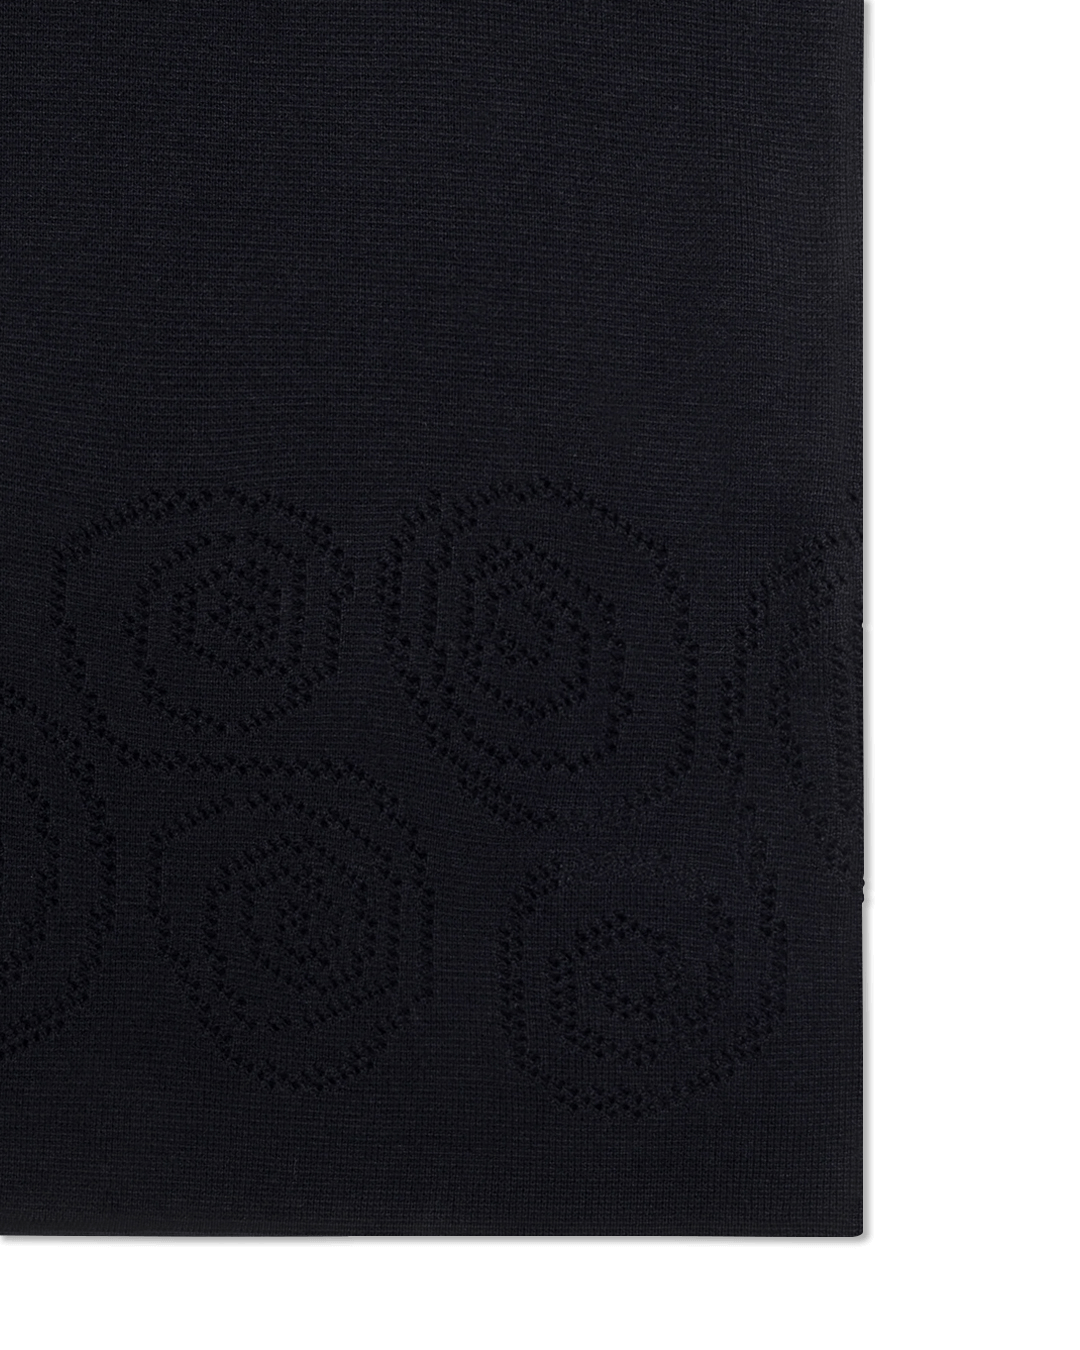 Perforated Swirl Knit Shirt $189 Stussy Tops Shirts Black